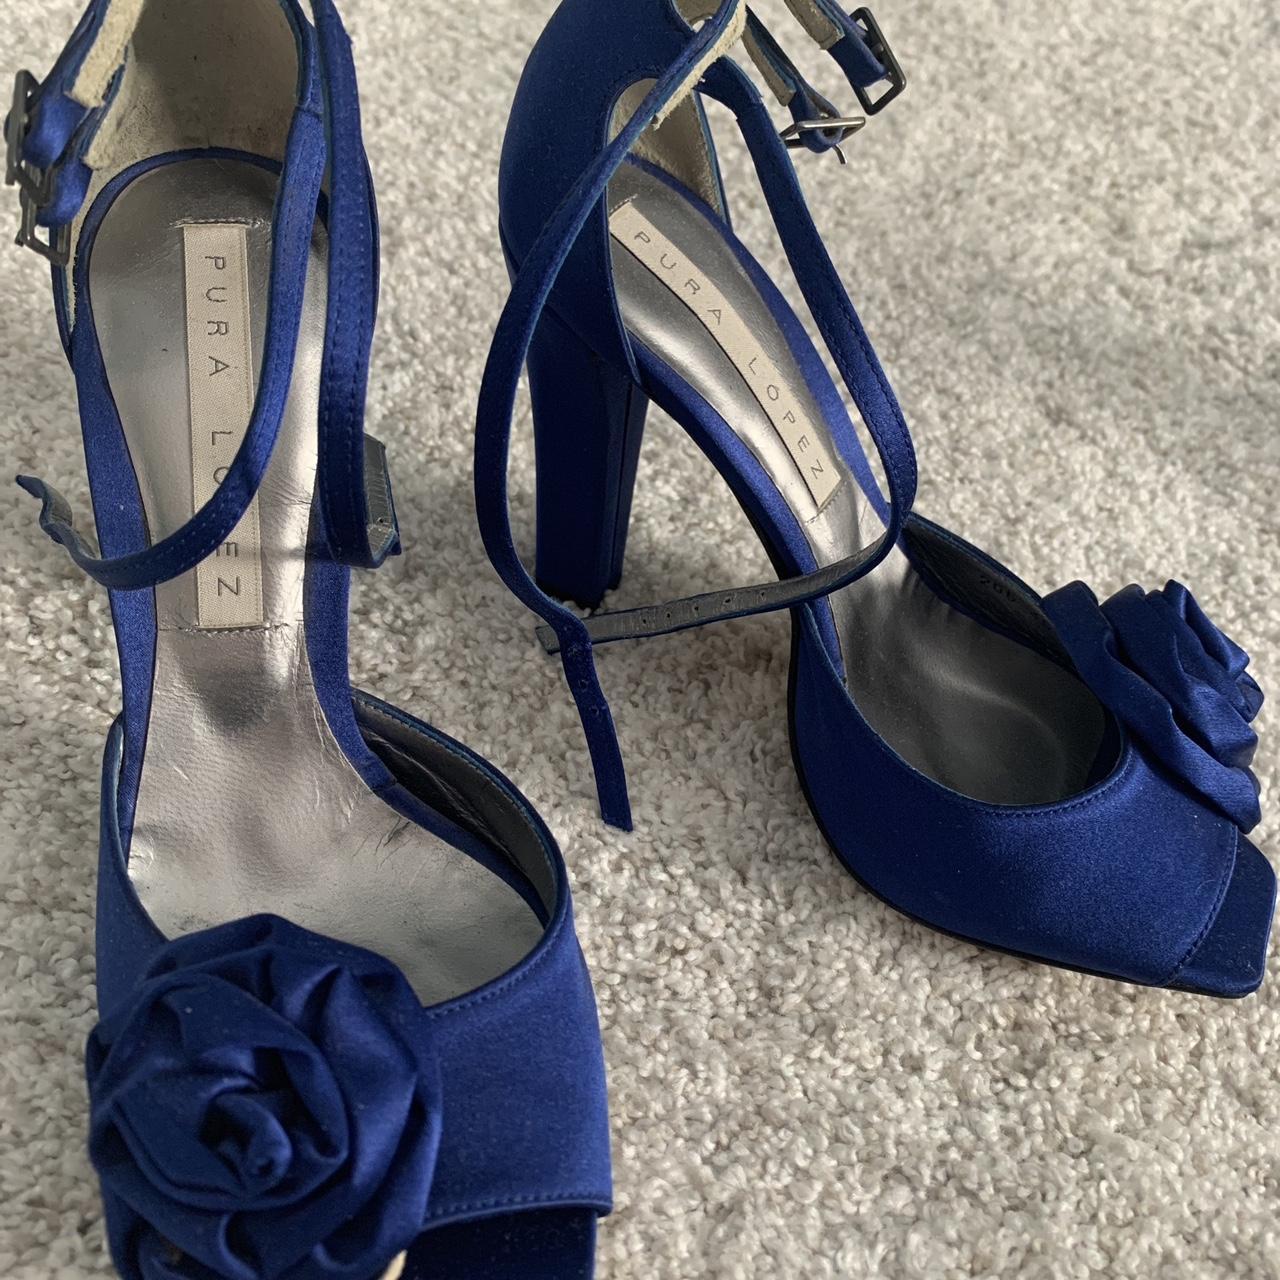 Shoes Woman Blue Color Wedding | Wedding Navy Blue Shoes Women - 22 Colors  Womens - Aliexpress